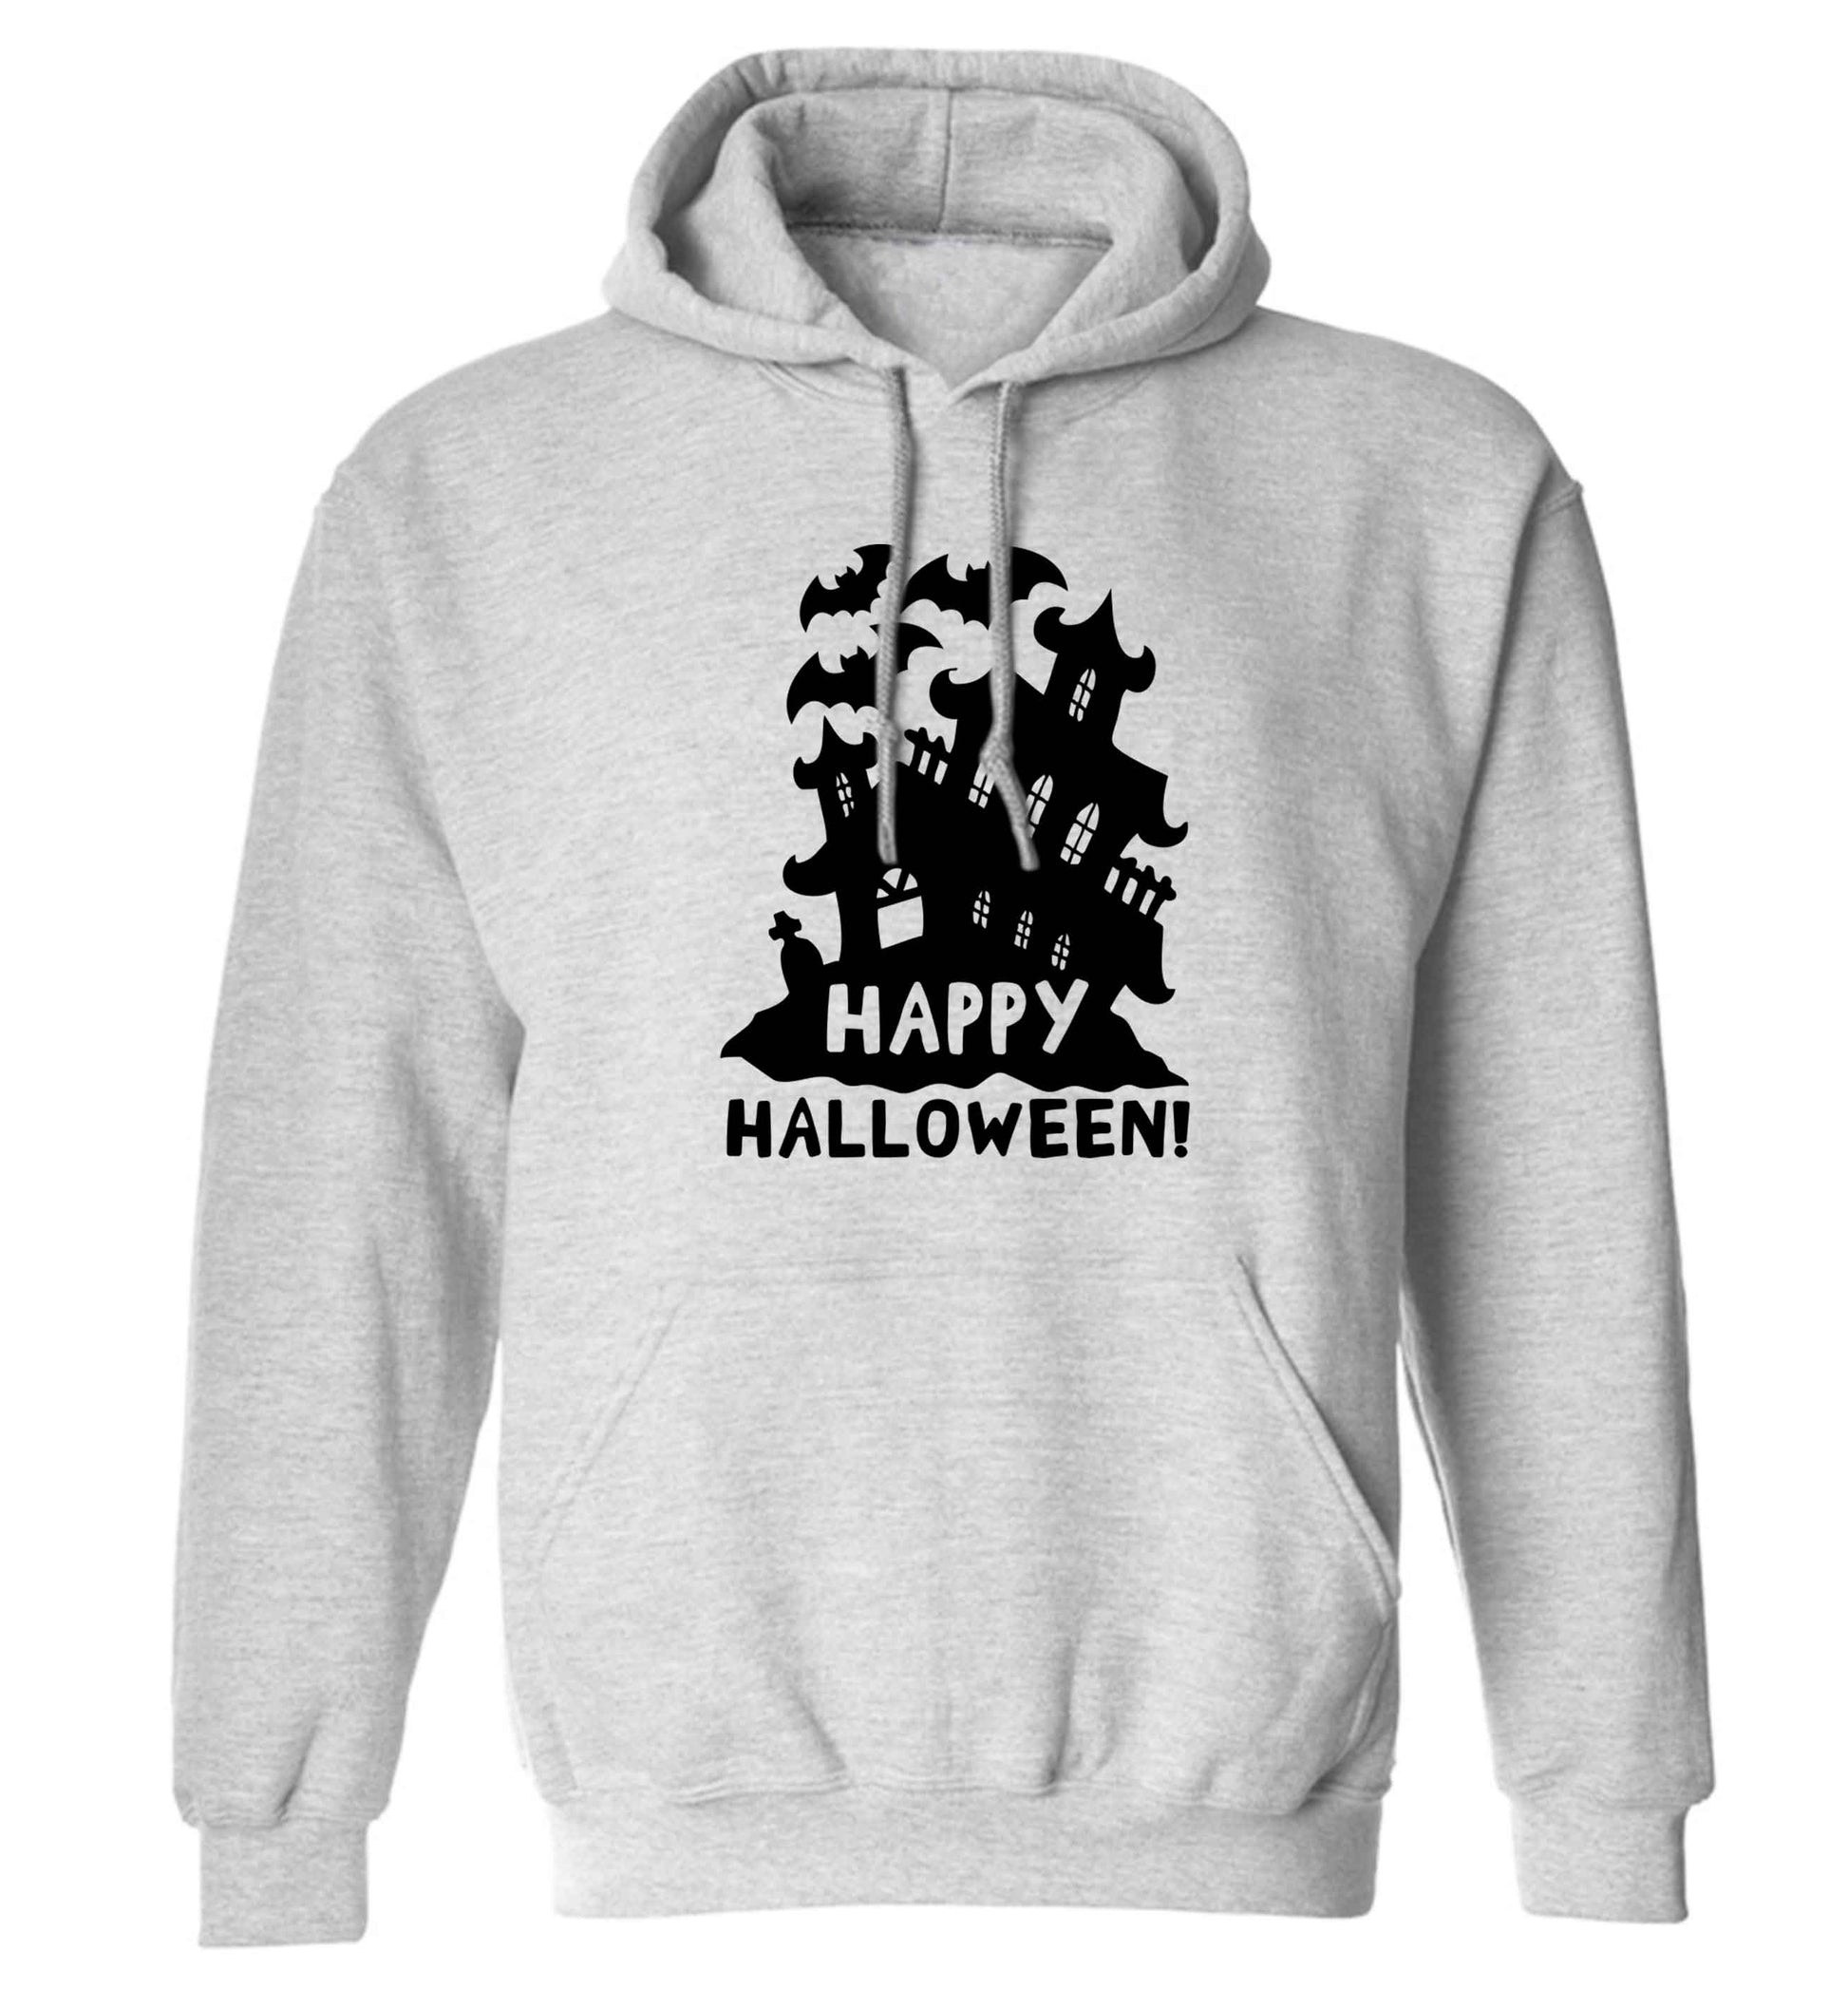 Happy halloween - haunted house adults unisex grey hoodie 2XL